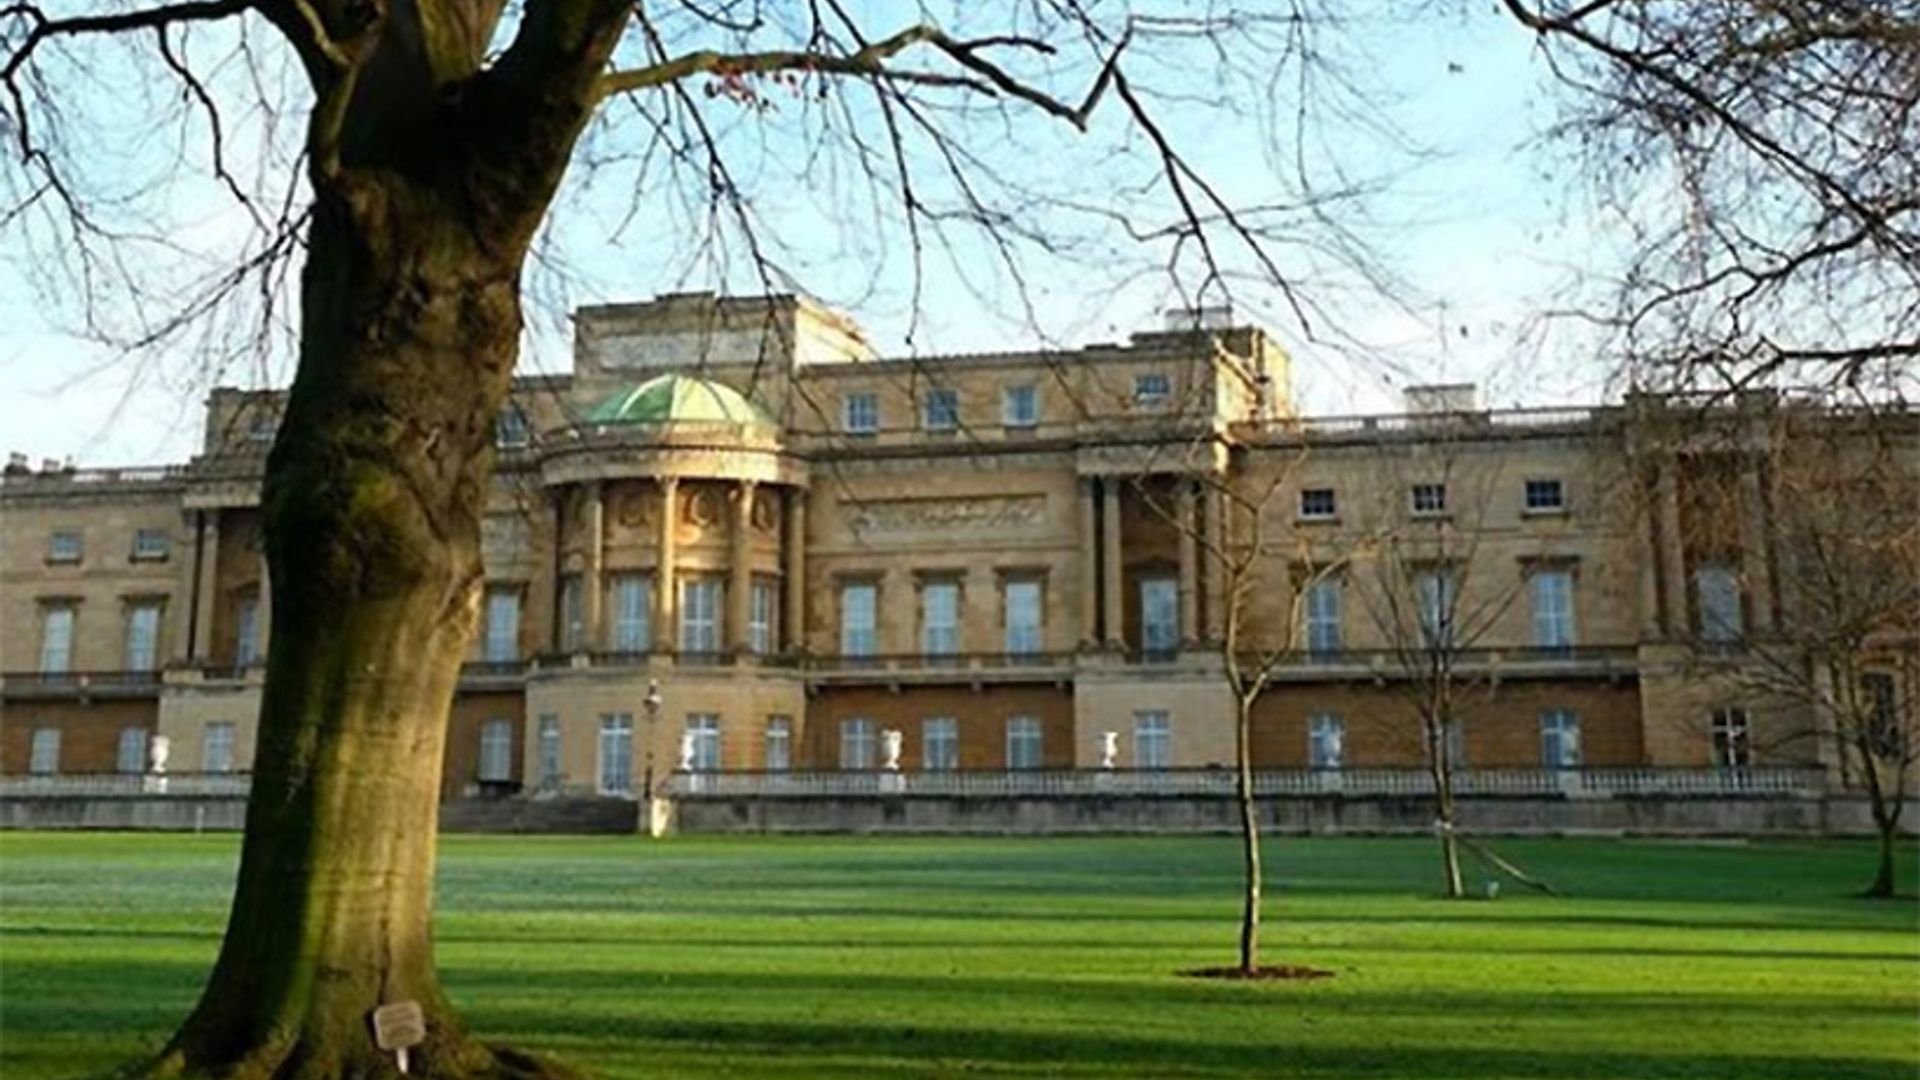 Buckingham Palace garden